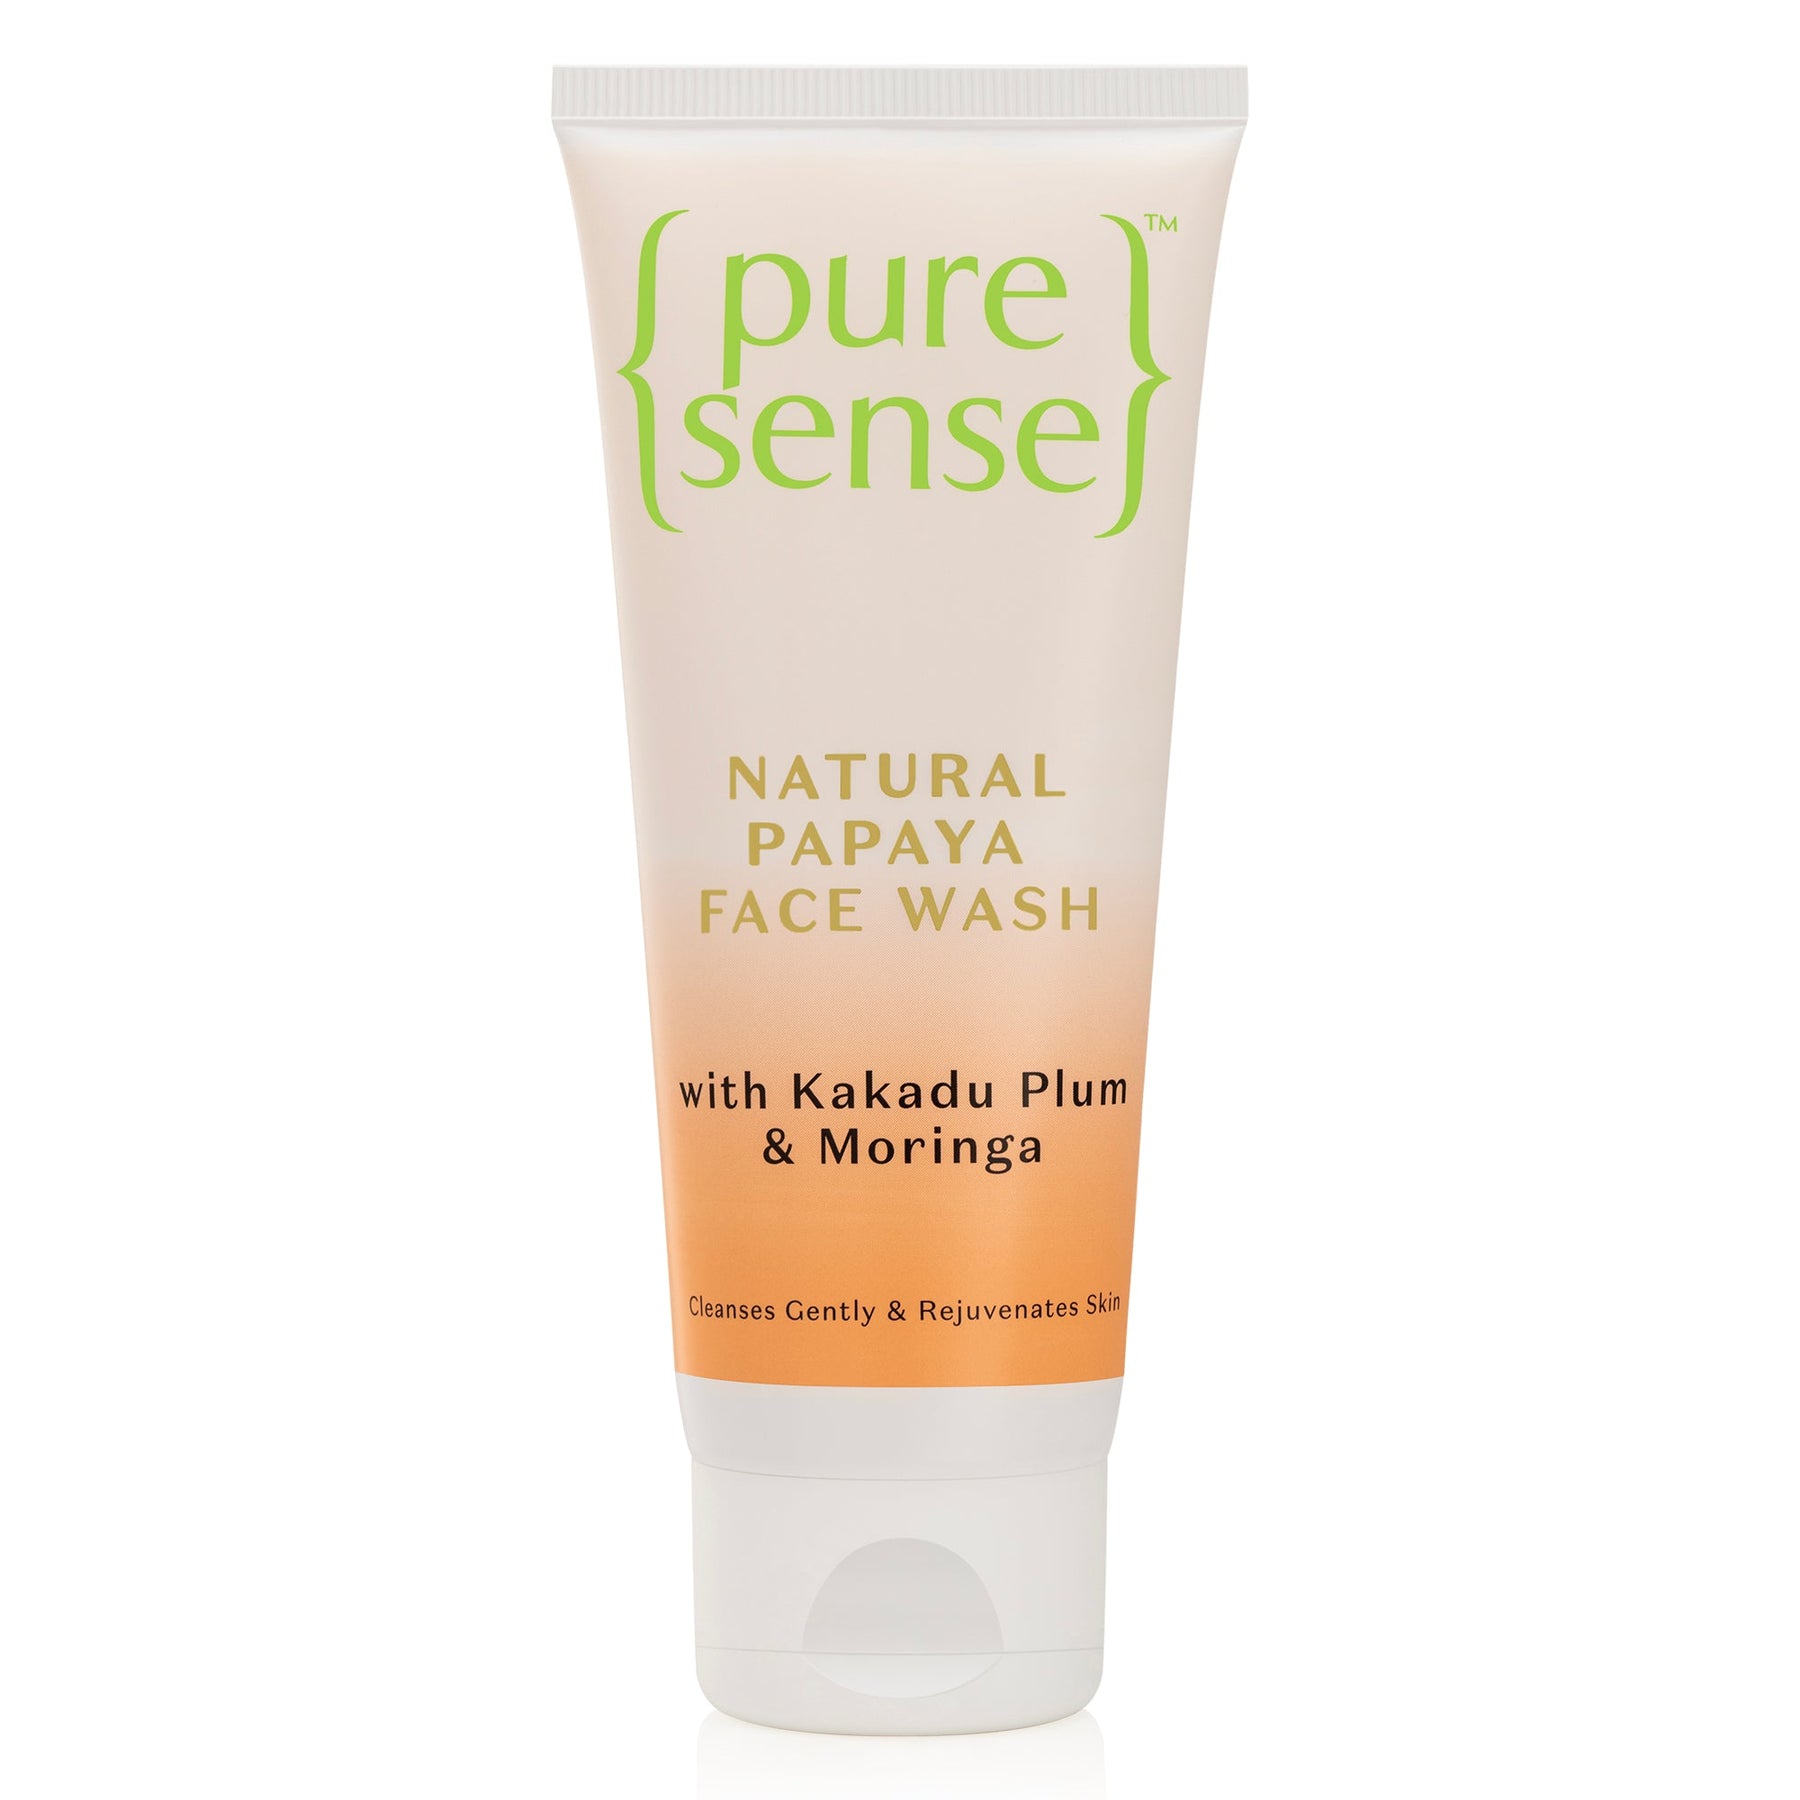 [CRED] Natural Papaya Face Wash | From the makers of Parachute Advansed | 100ml